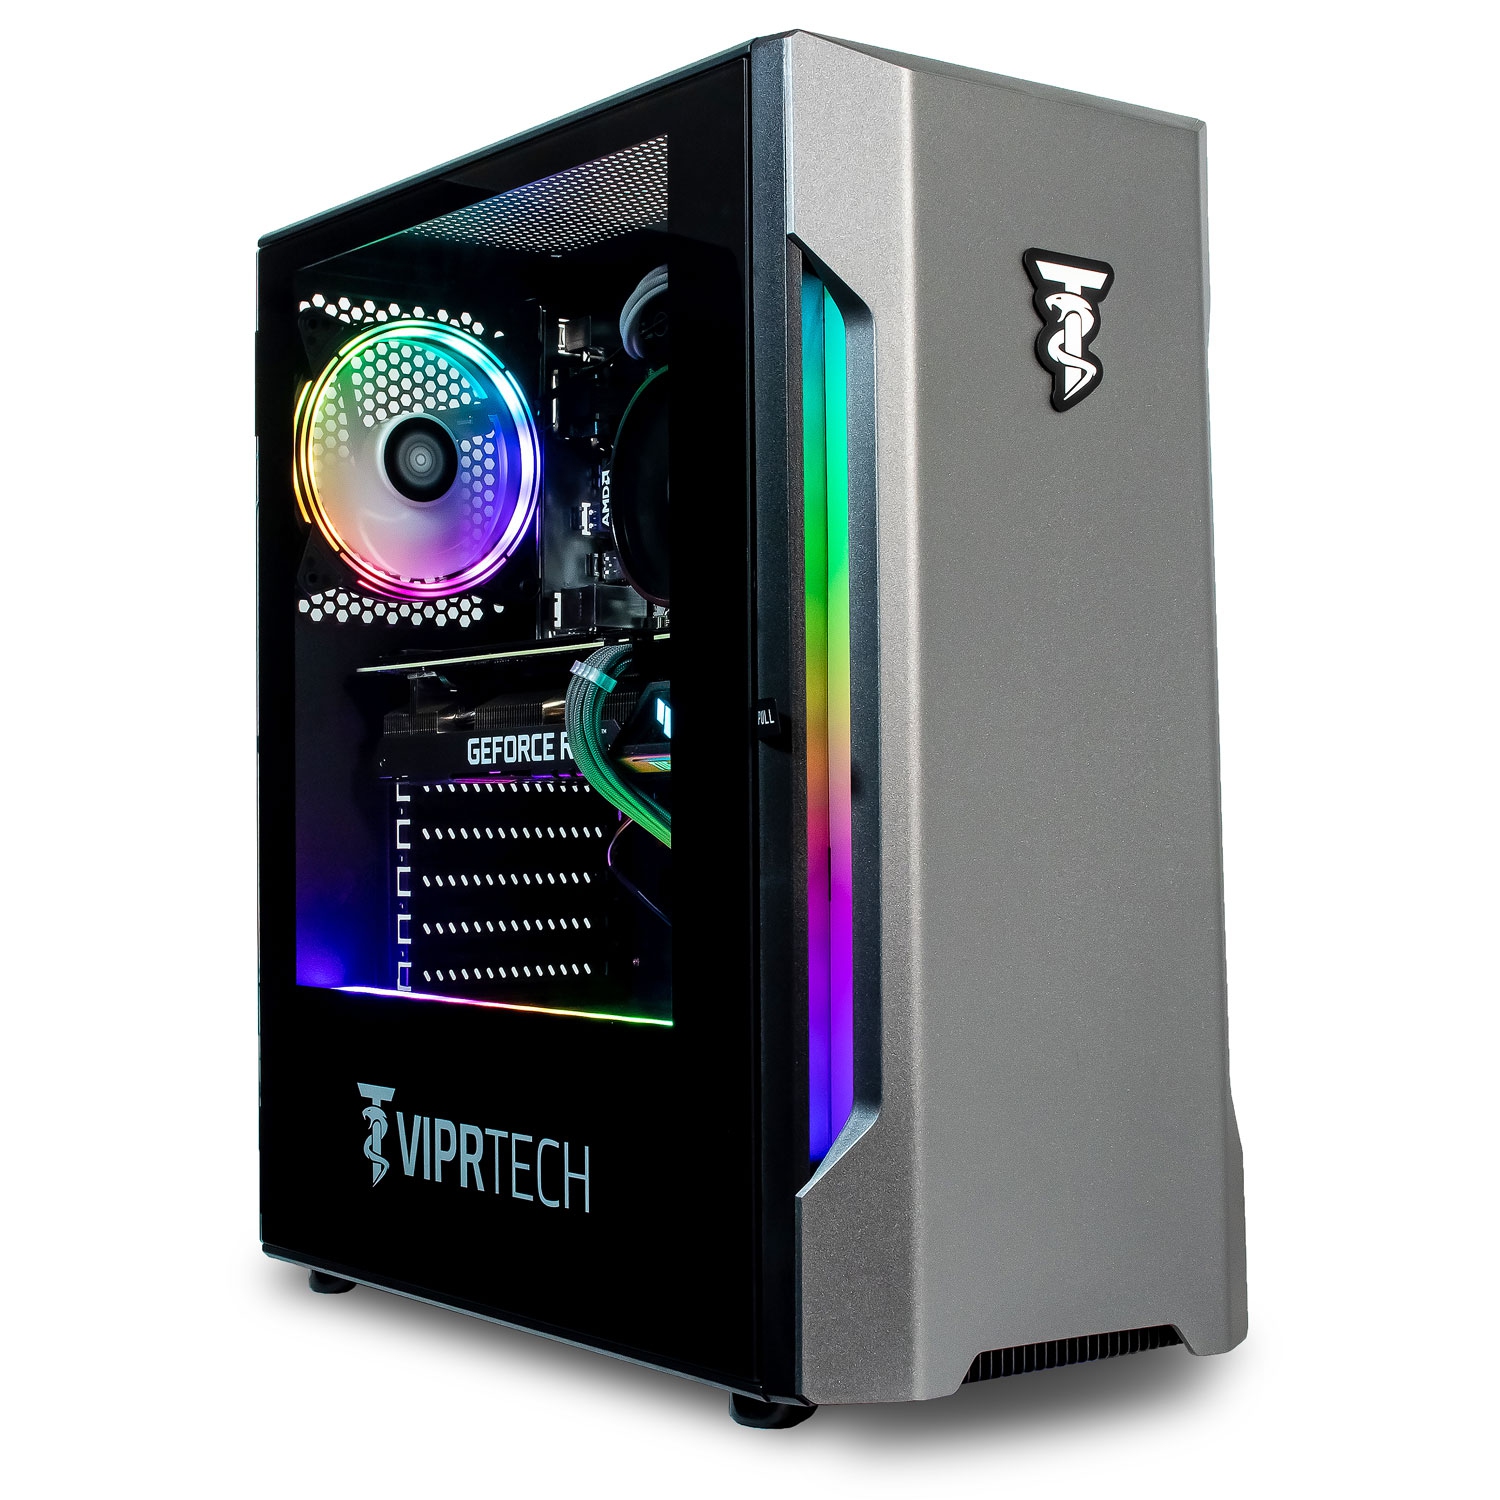 ViprTech Rebel Gaming PC Desktop Computer - AMD Ryzen 5 (12-LCore 3.9Ghz), RTX 2060 Super 8GB, 16GB DDR4 RAM, 512GB NVMe SSD, VR-Ready, Streaming, WiFi, RGB, Windows 11, Warranty